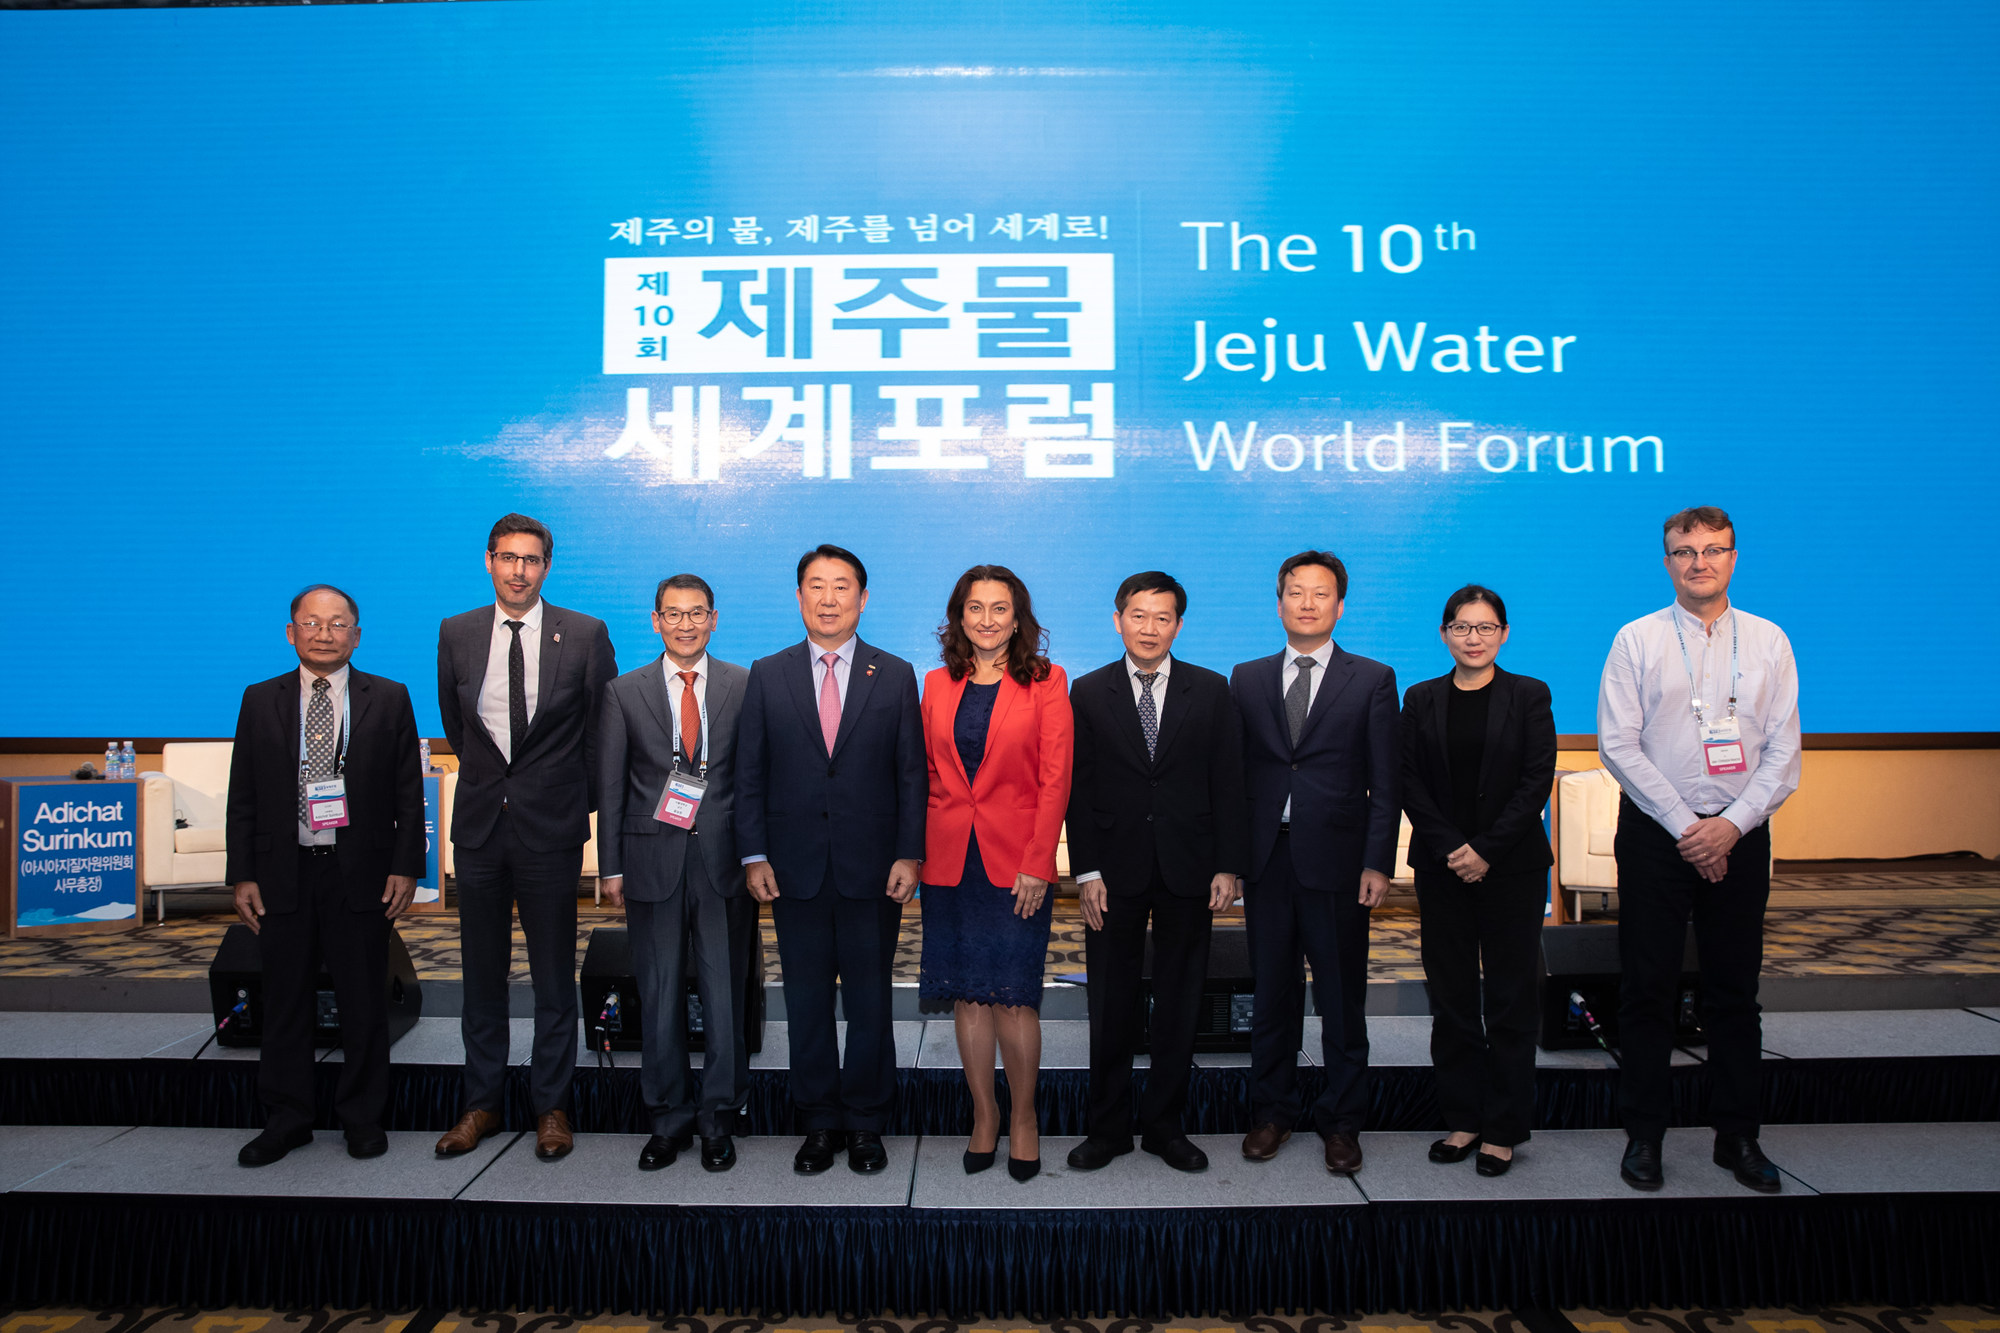 The 10th Jeju Water World Forum